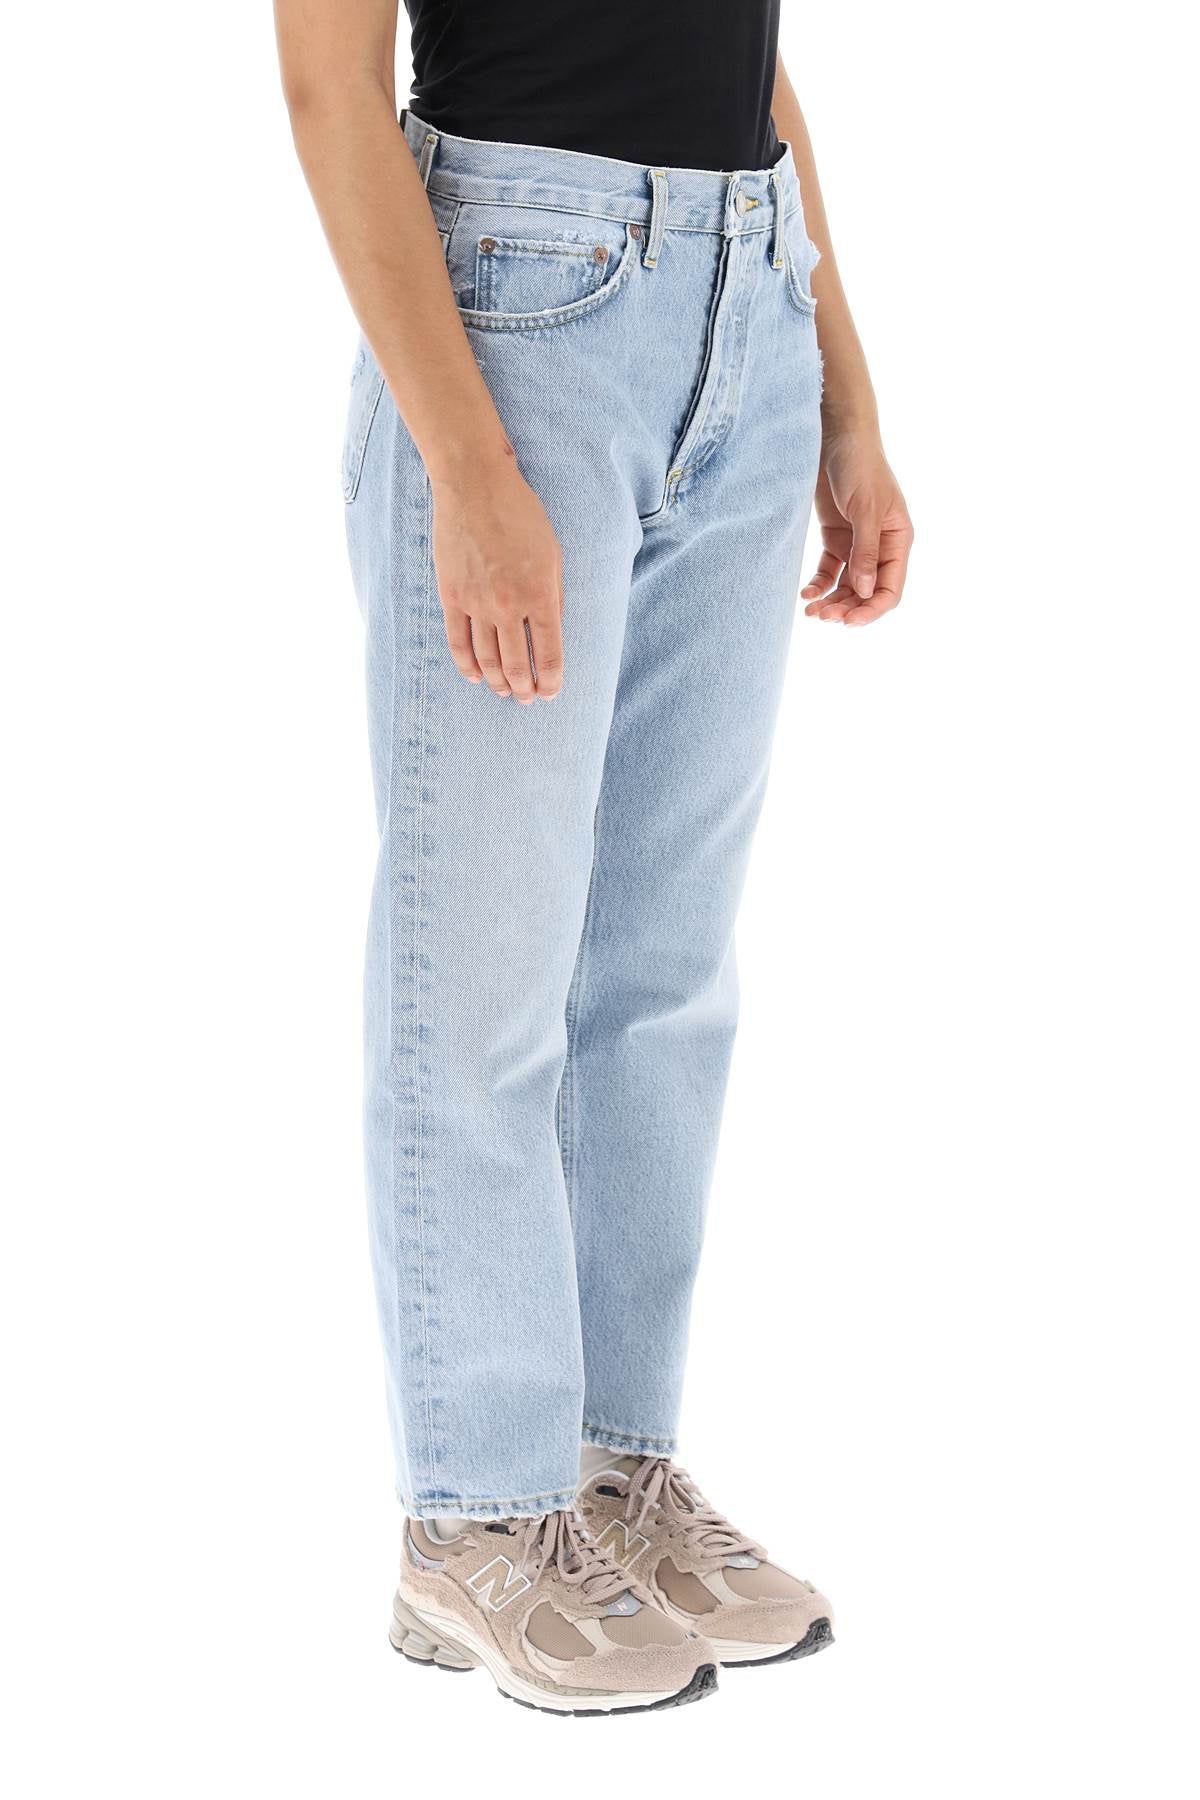 Agolde 'parker' jeans with light wash-1